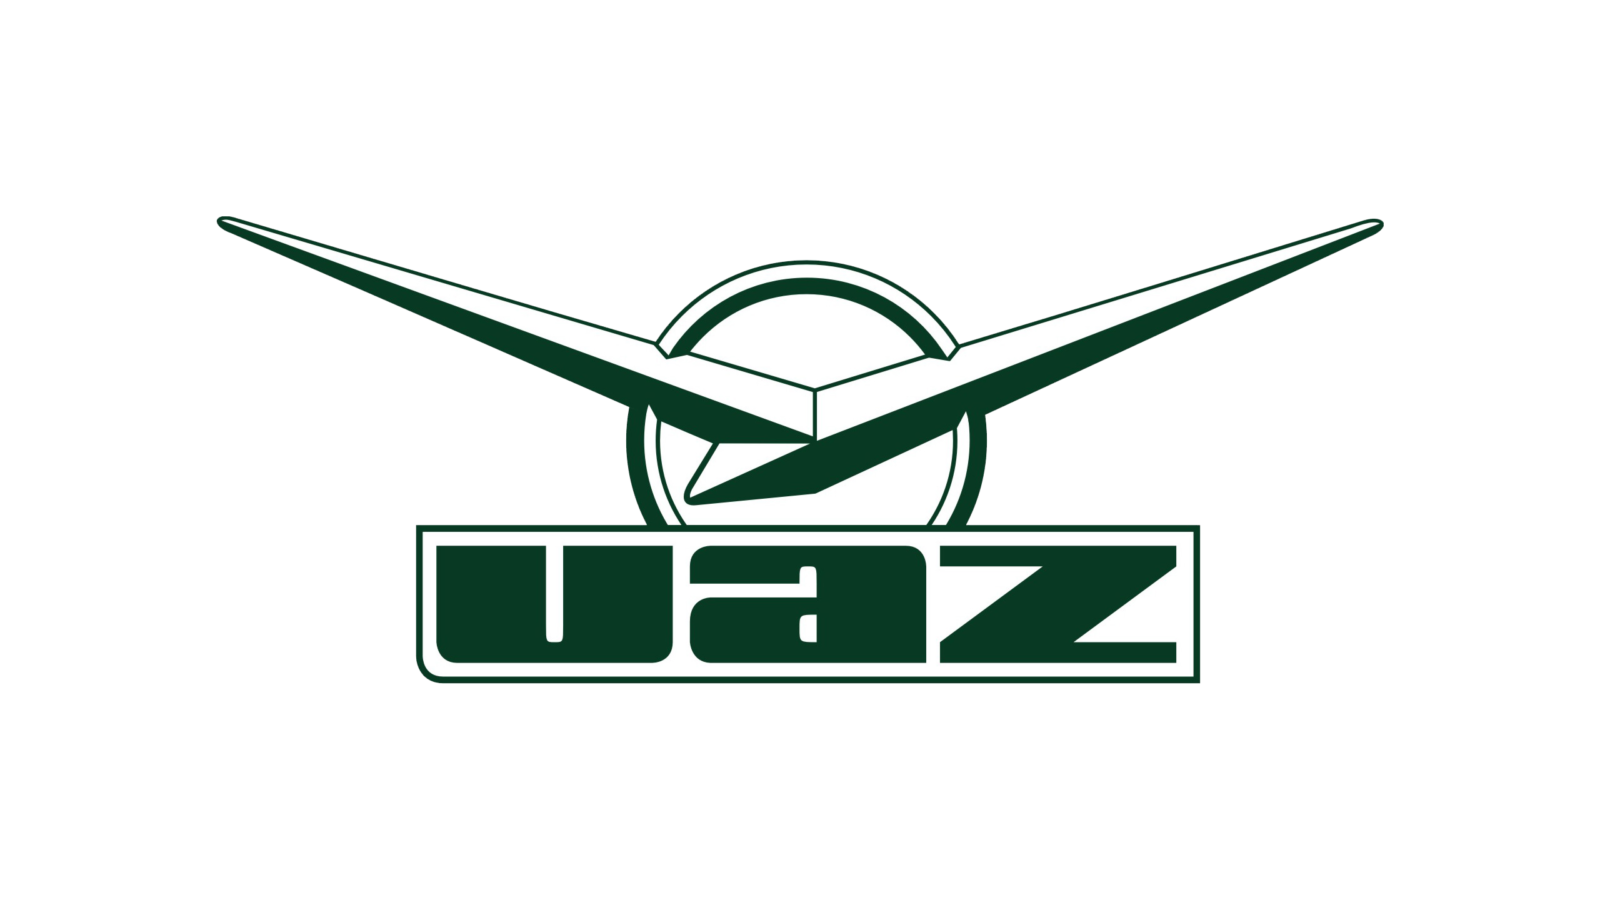 Uaz Logo